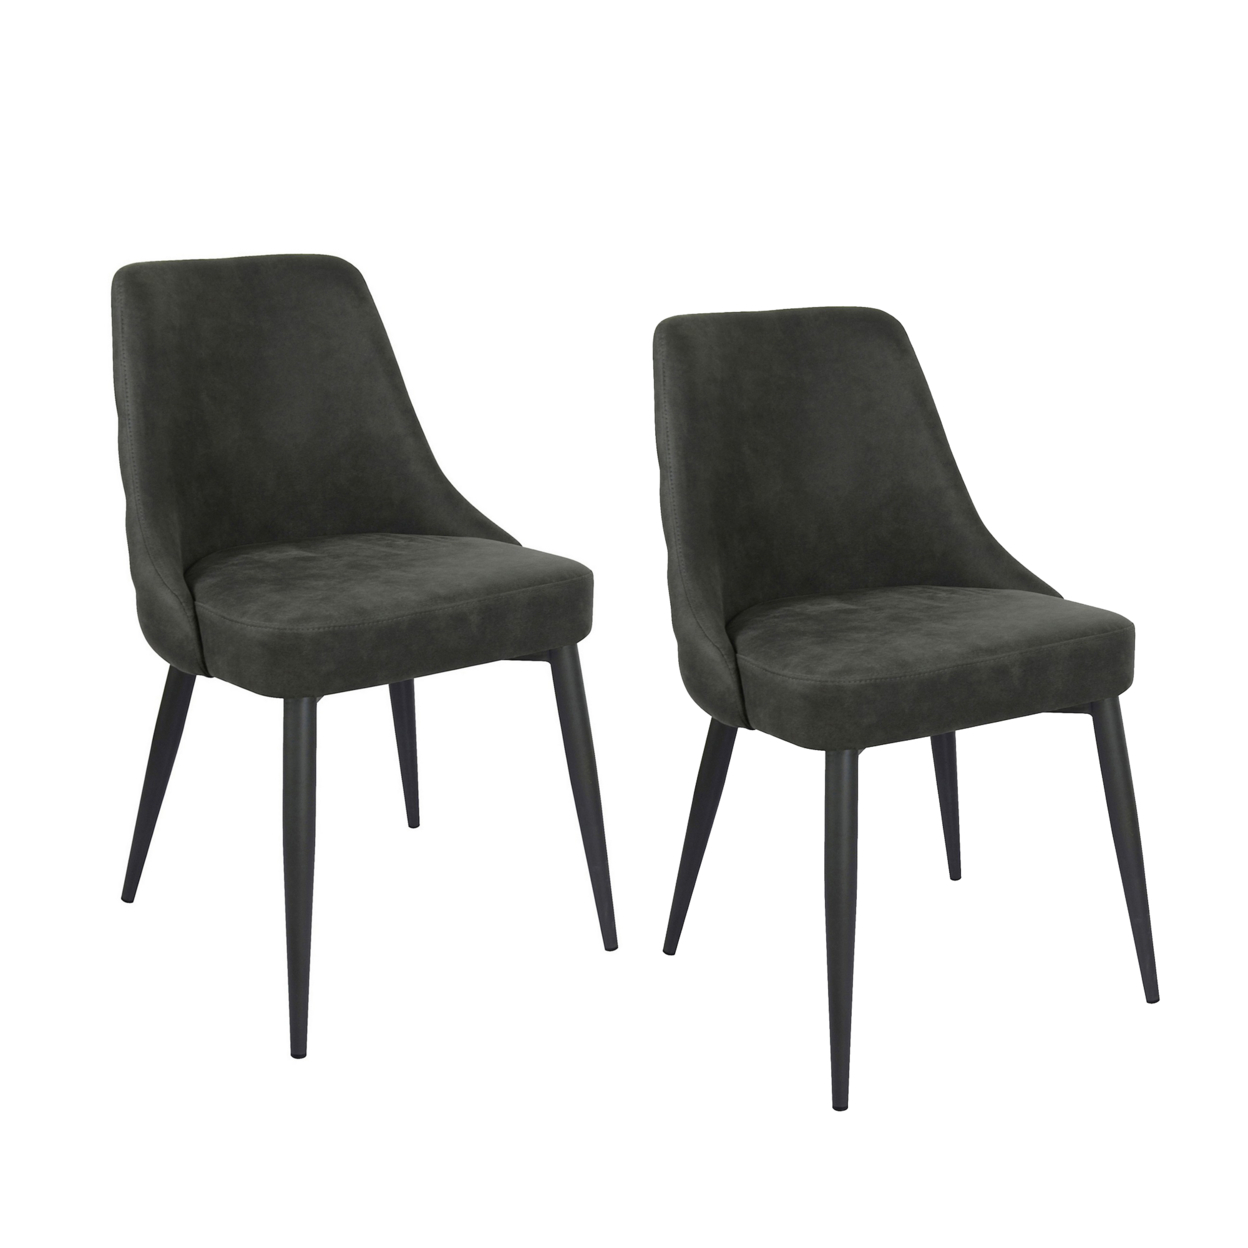 Glom 21 Inch Dining Chair, Set Of 2, Gray Upholstery, Tufted Backrest - Saltoro Sherpi